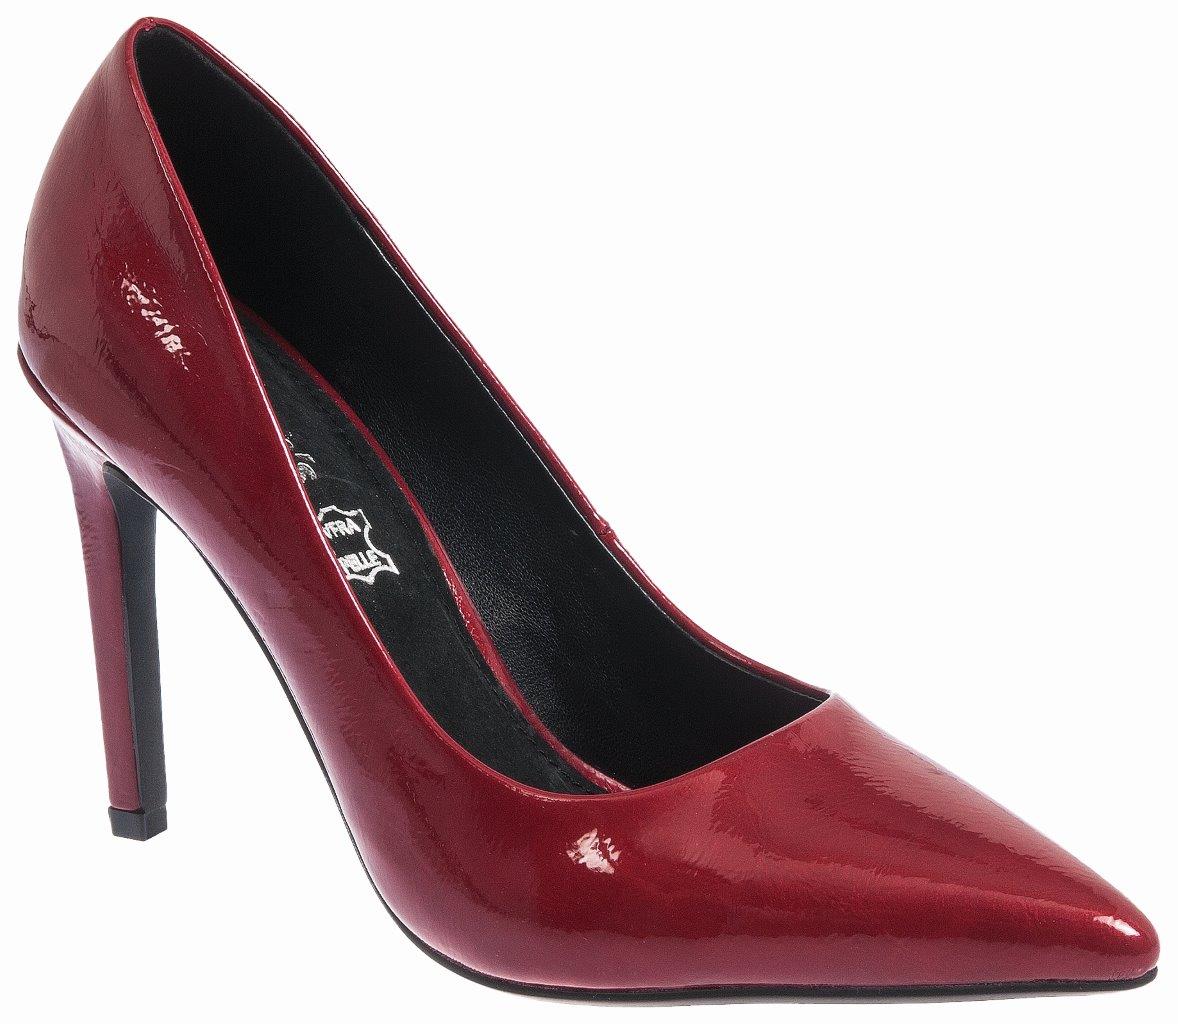 Oδηγός Αγοράς: 12 κόκκινα ζευγάρια παπούτσια για όλα τα στυλ